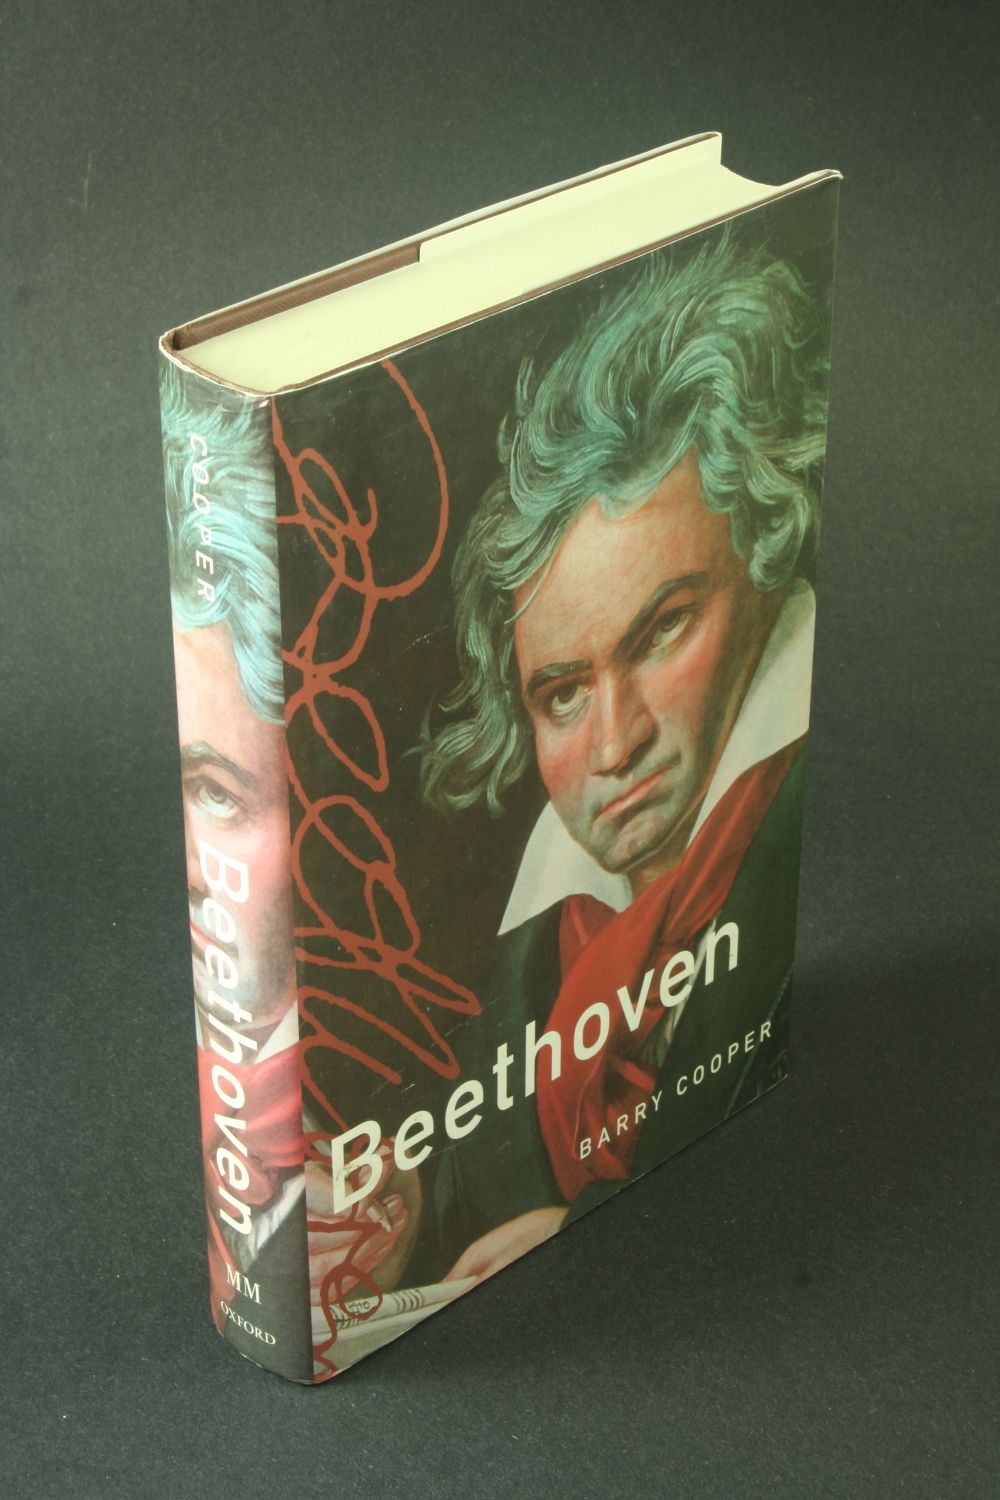 Beethoven. - Cooper, Barry, 1949-